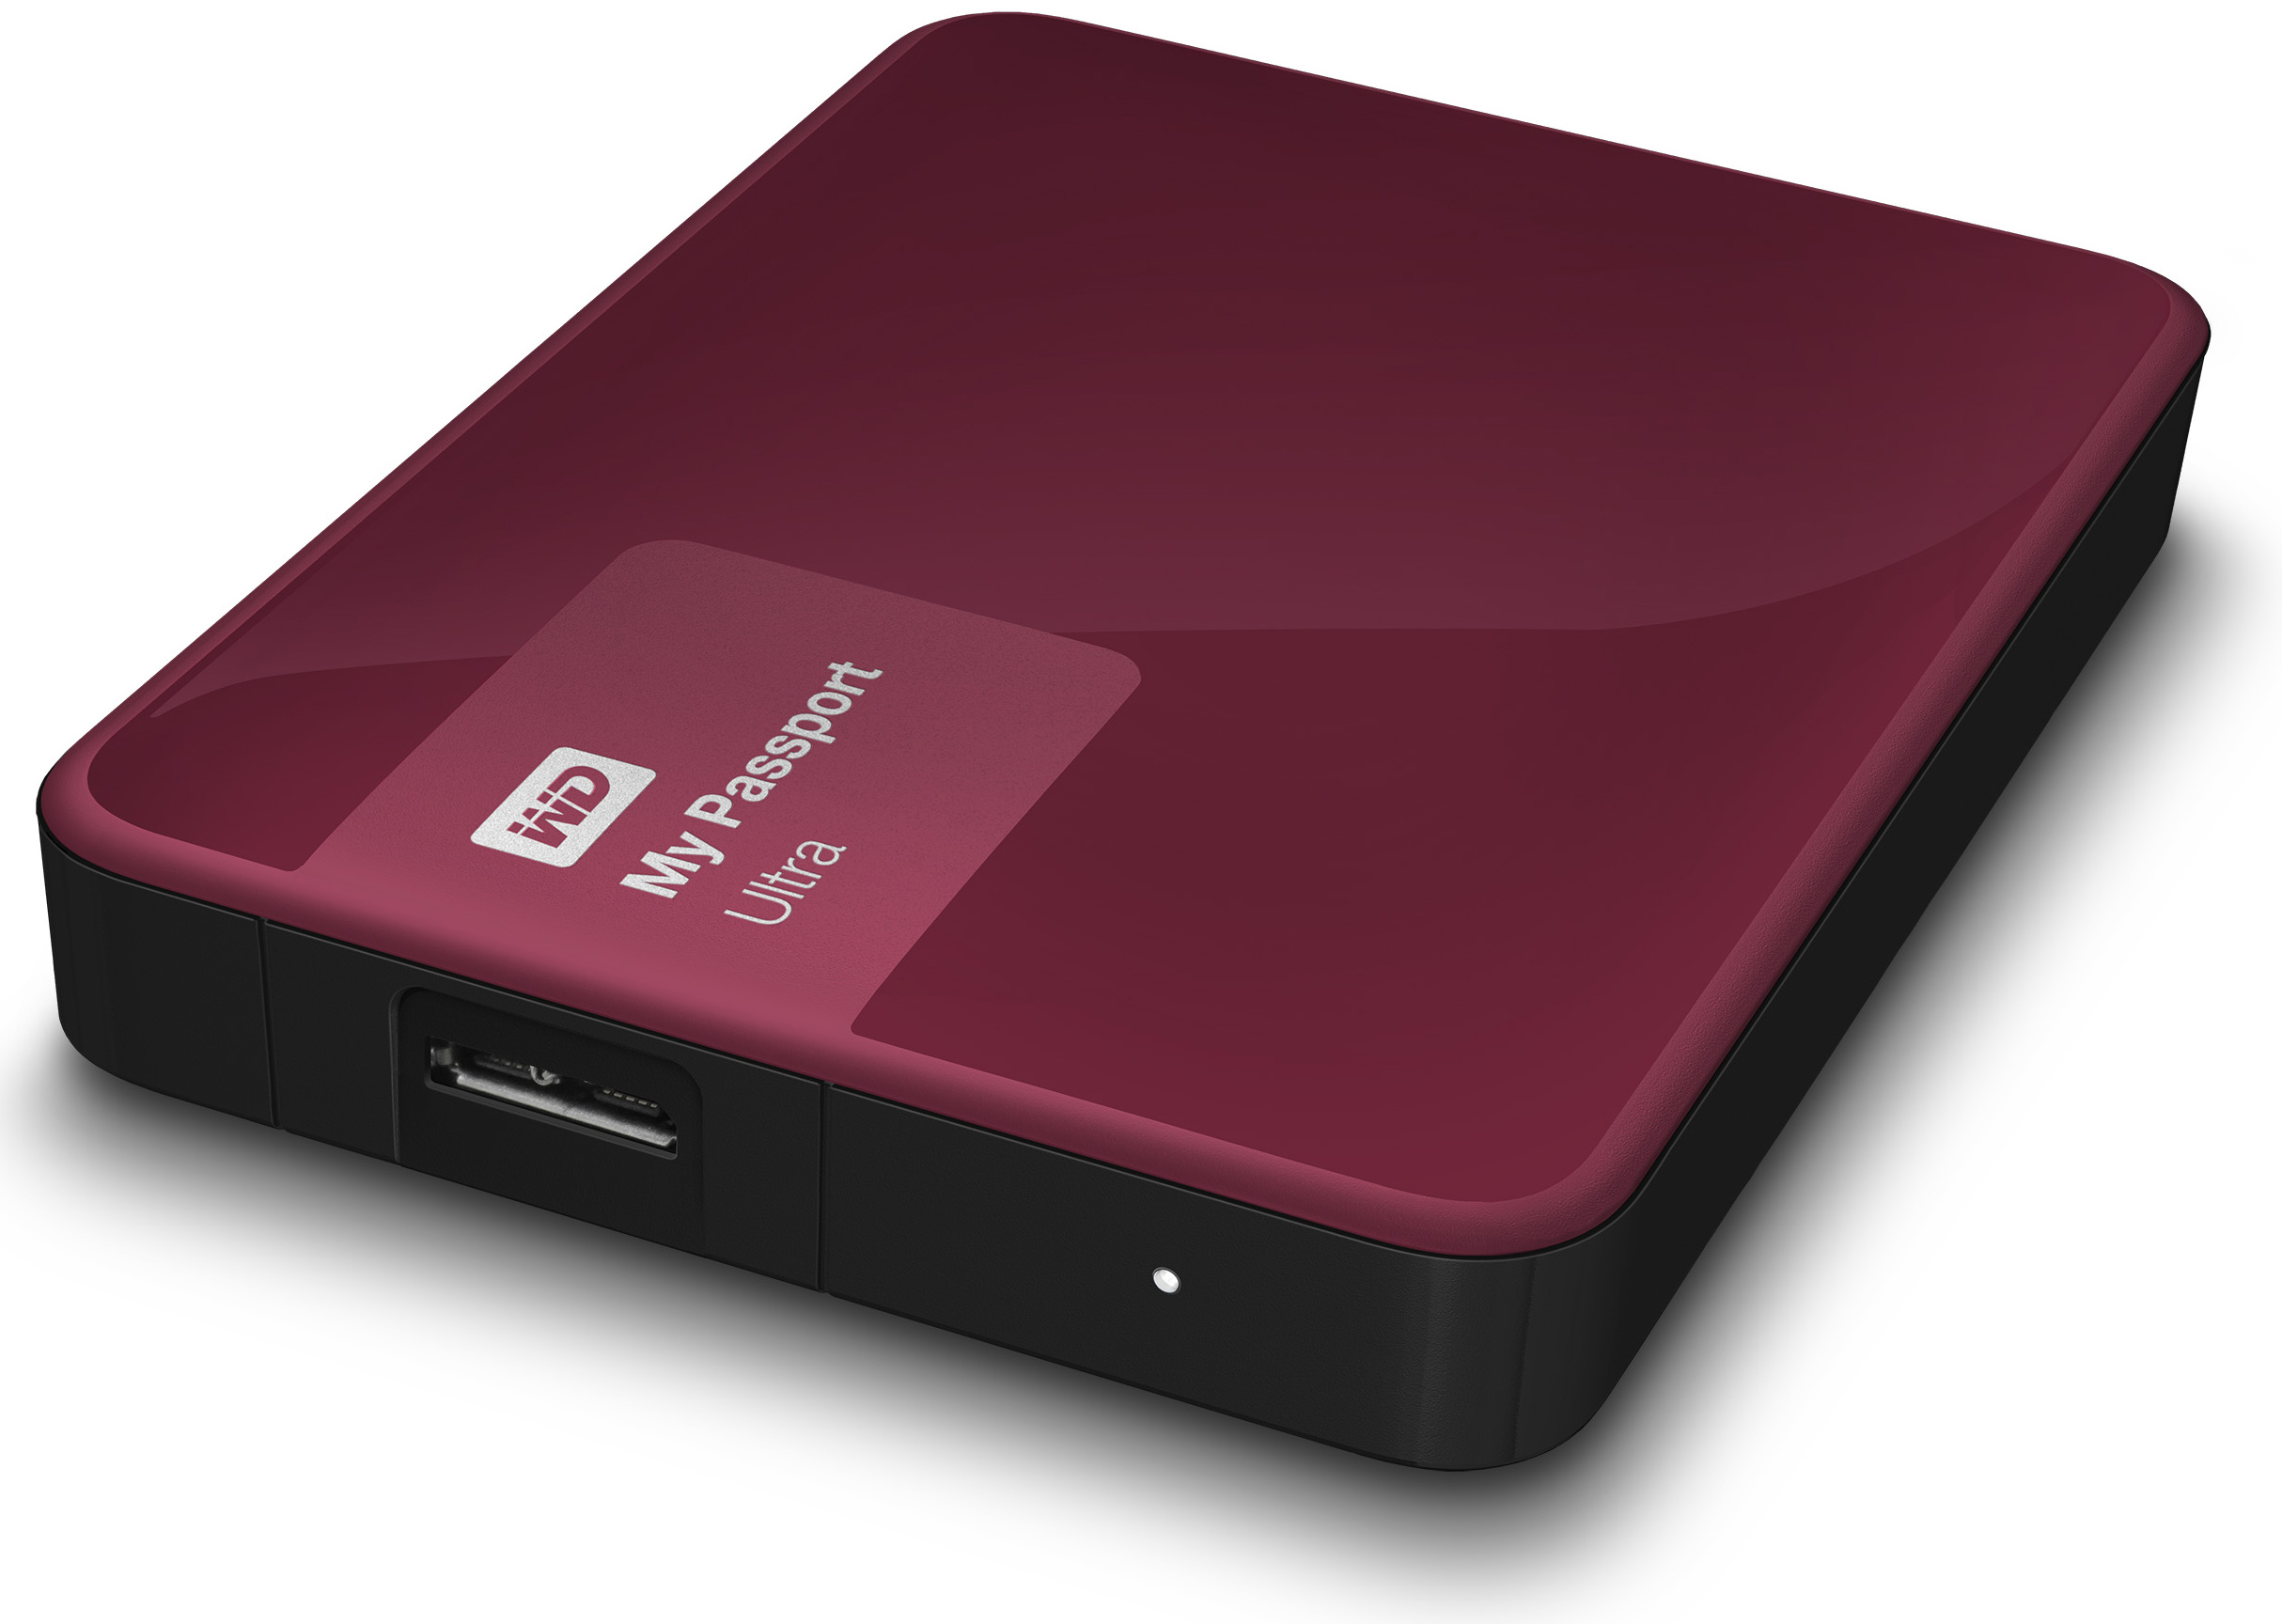 Western Digital Expands My Passport External USB 3.0 Drives To 4 TB